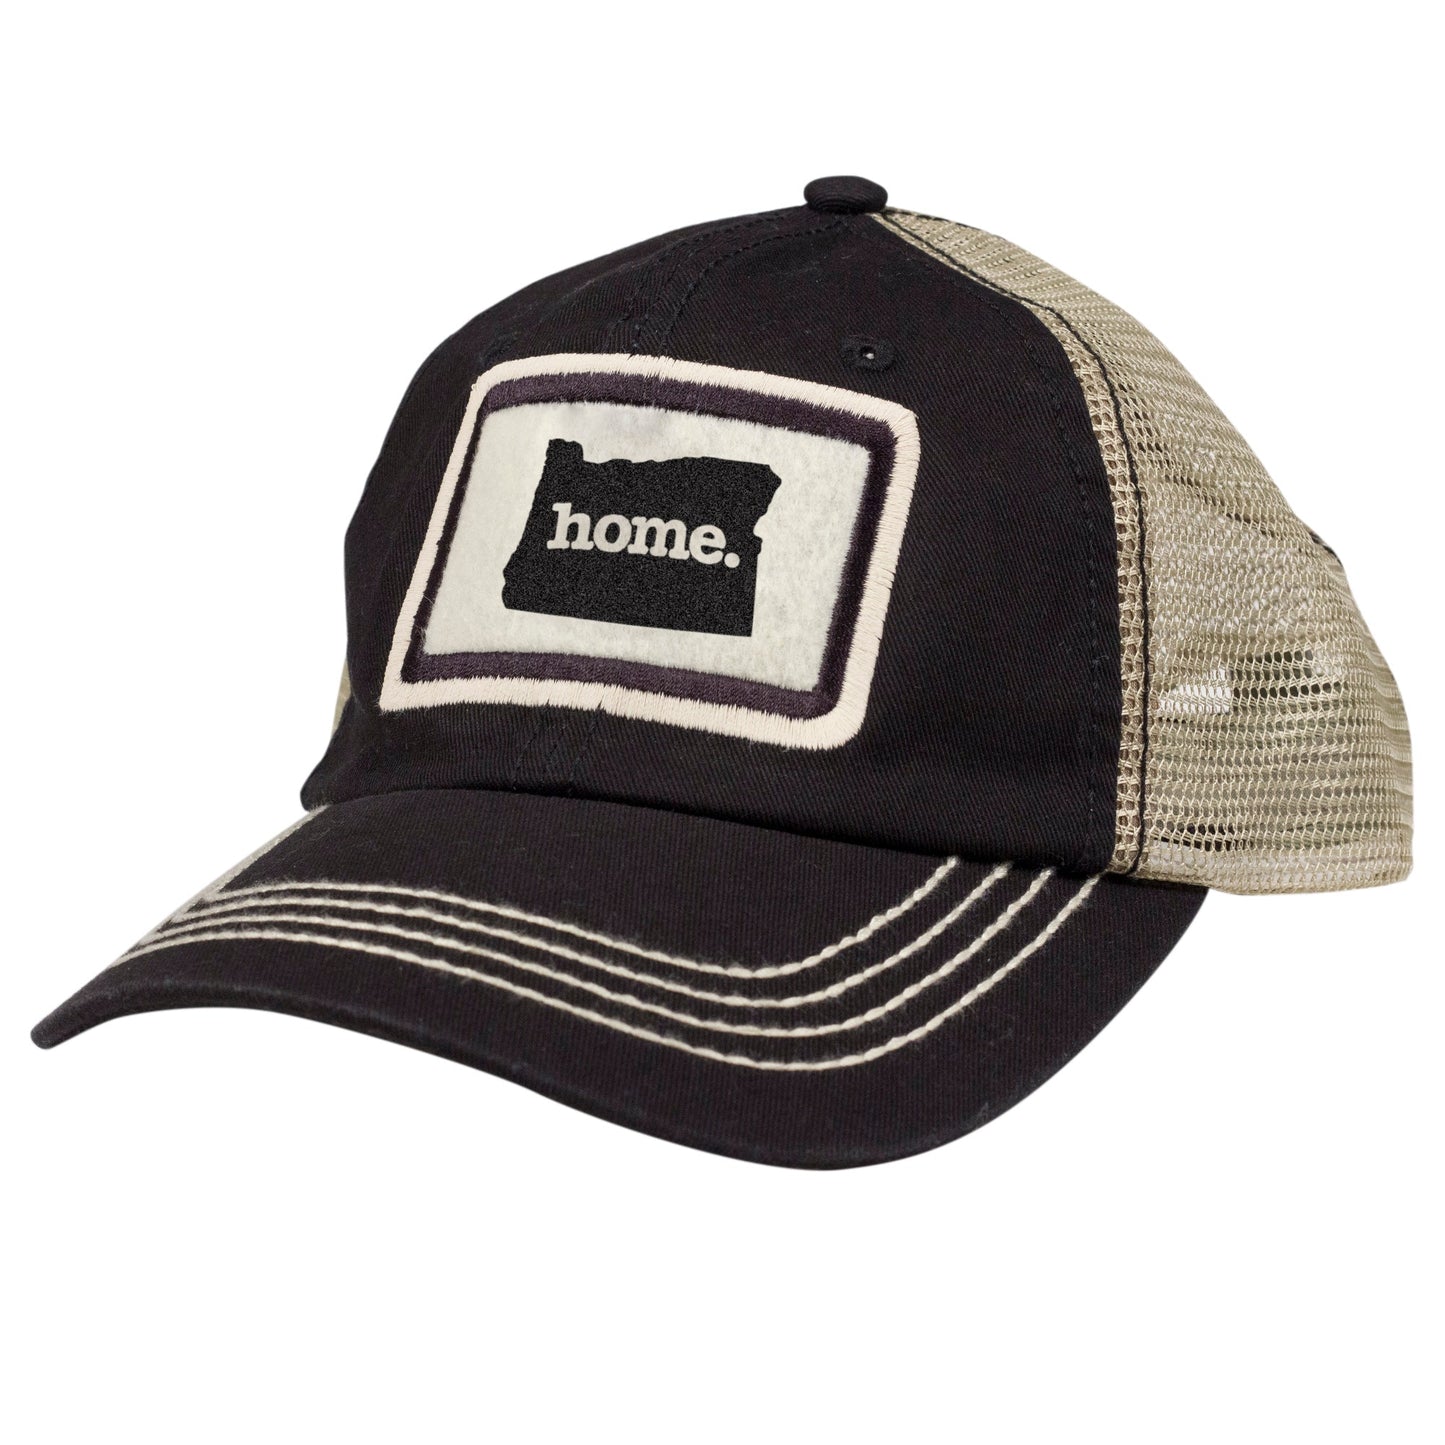 home. Mesh Hat - Oregon